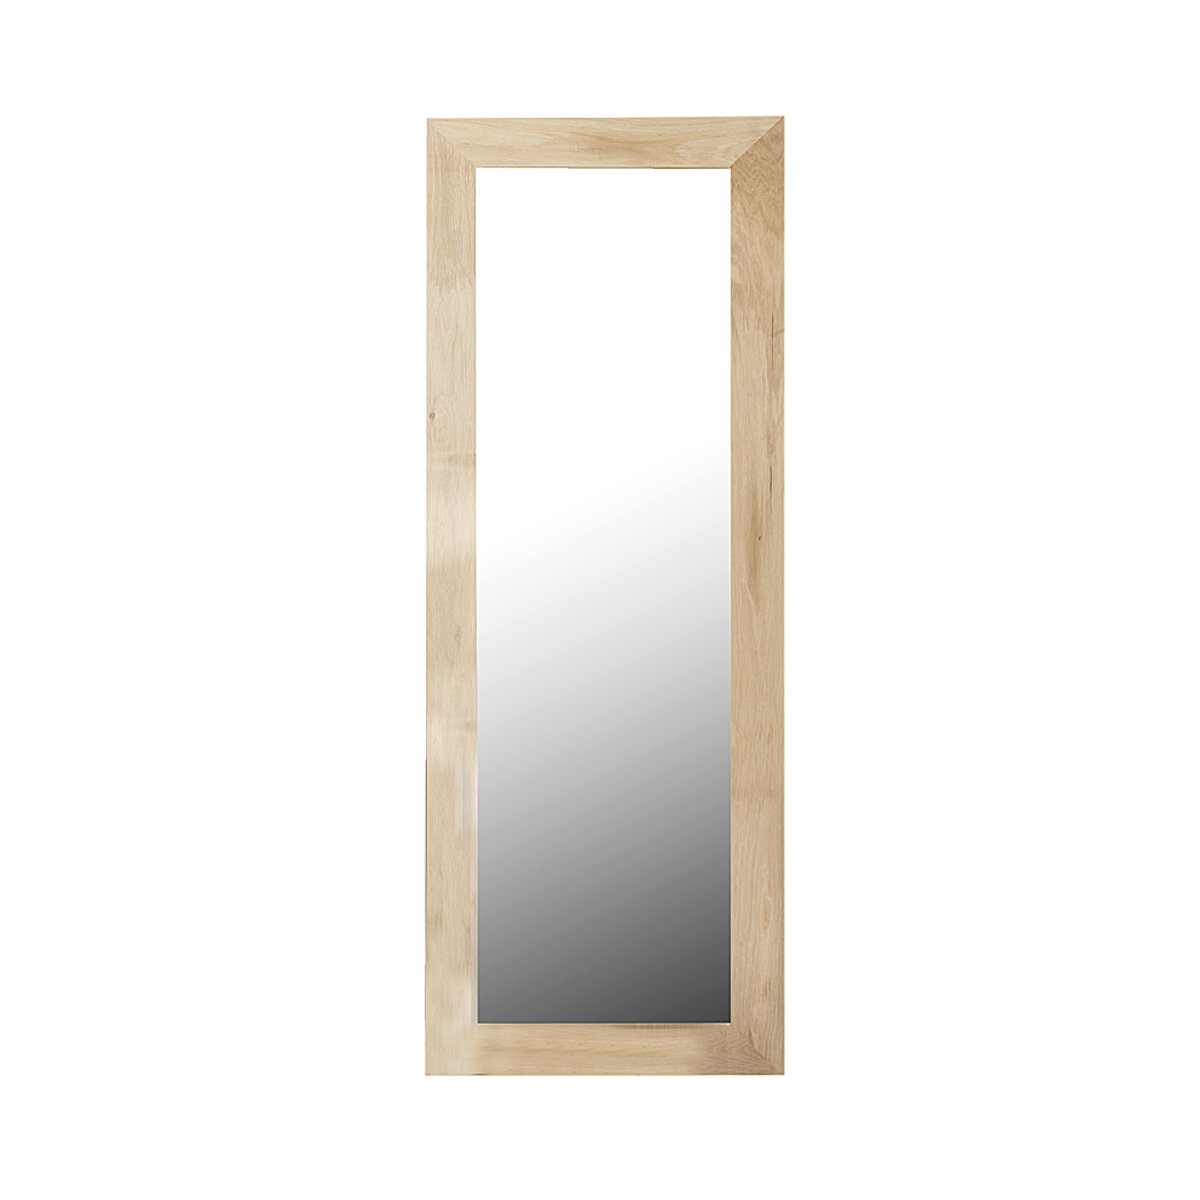 Solid-oak-frame-mirror